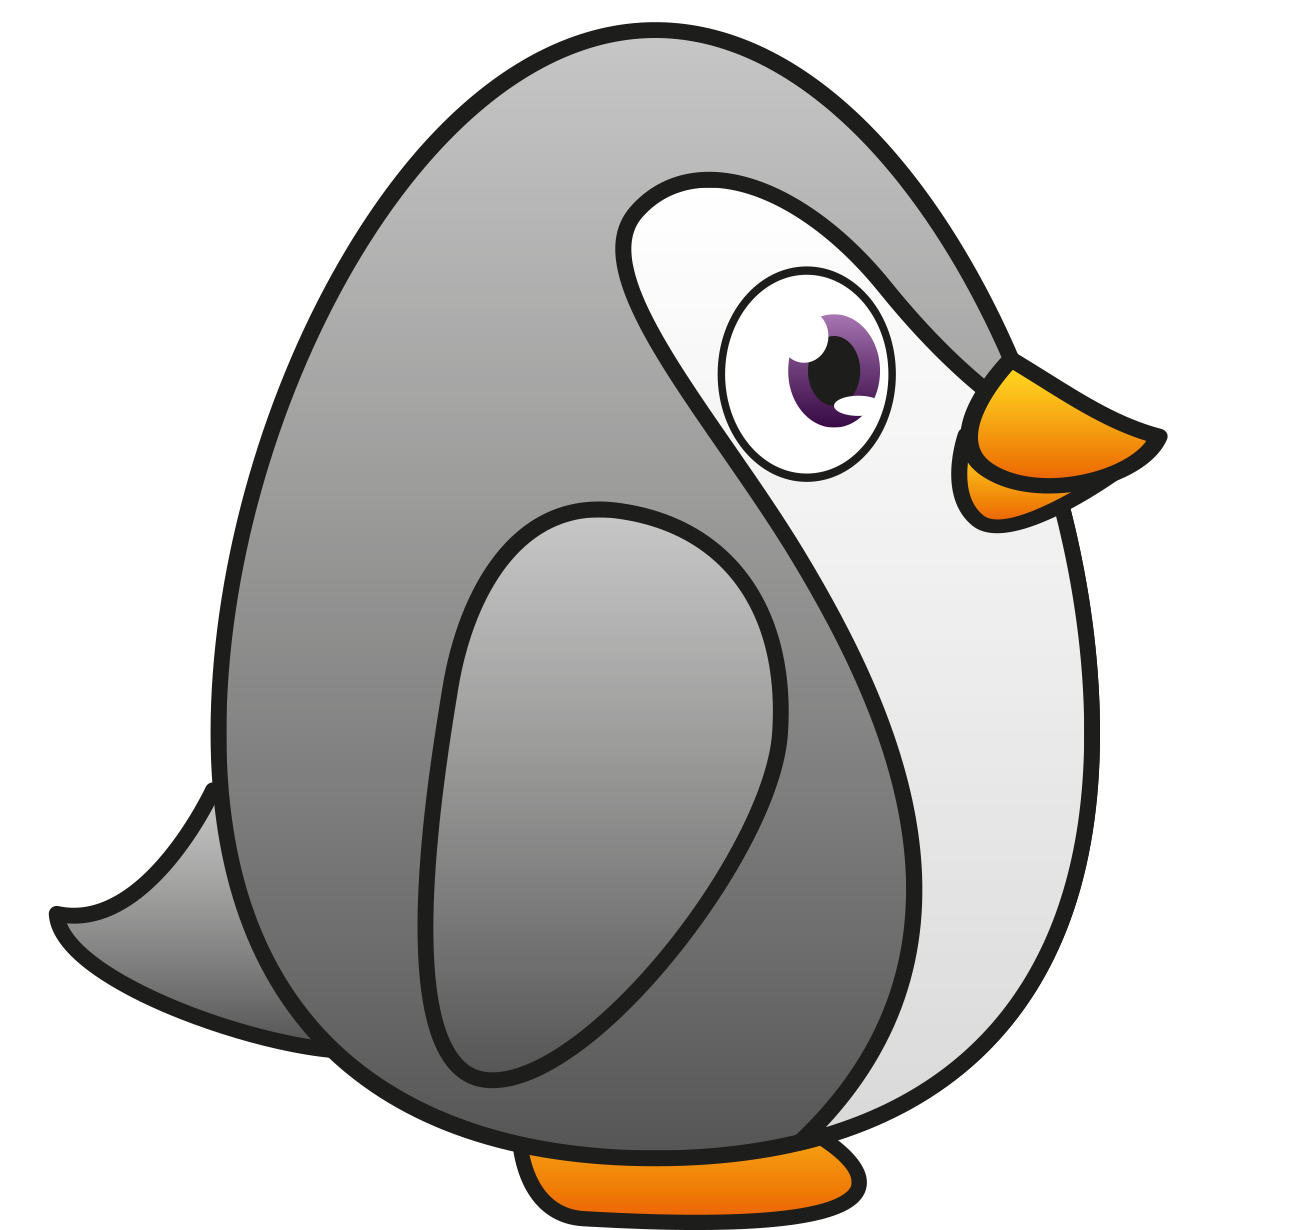 Download PNG image - Cute Penguin PNG Image 